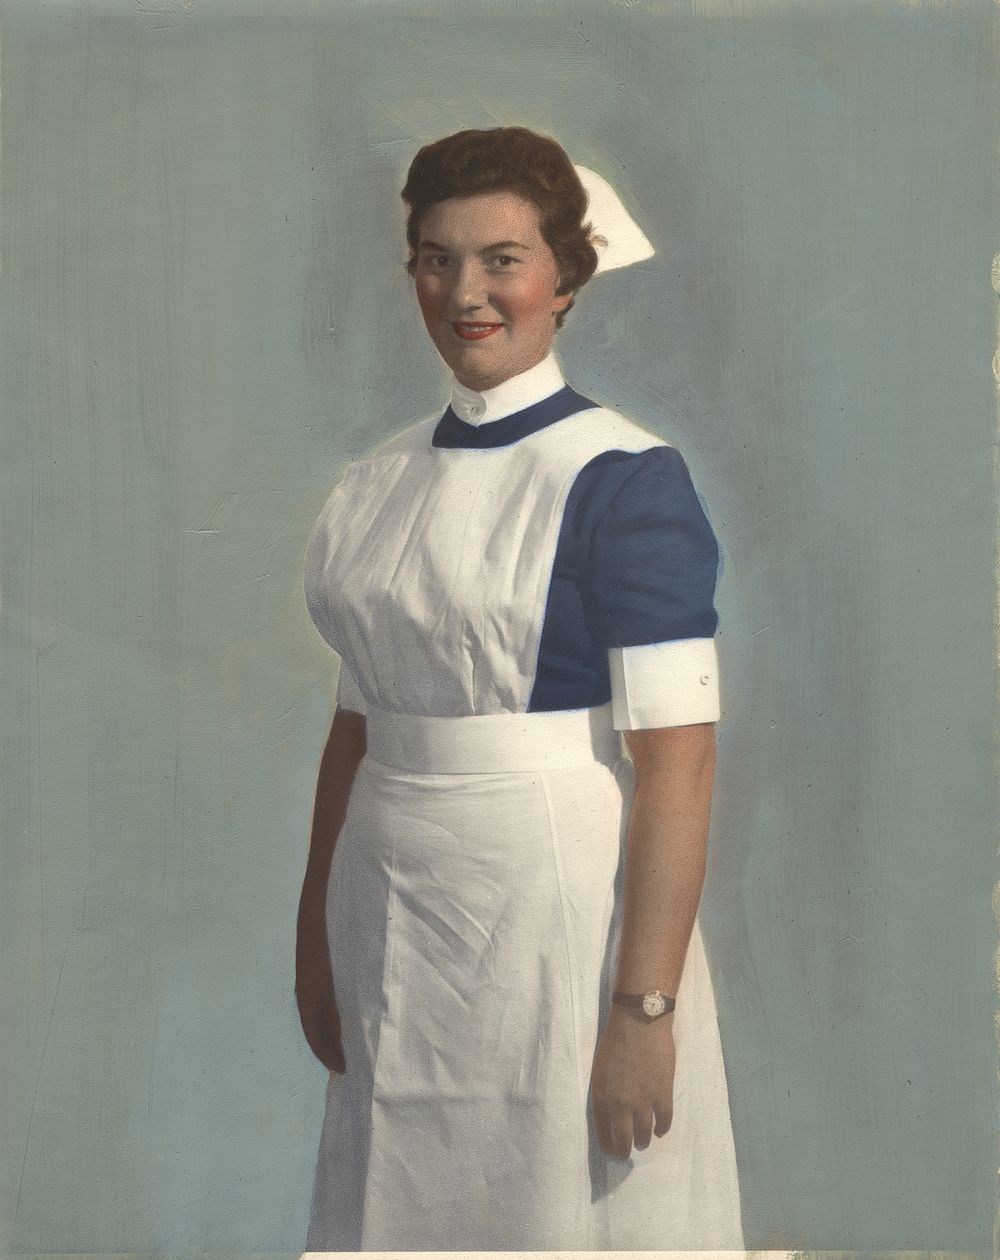 Nurse wearing uniform from Ireland. Original public domain image from Flickr